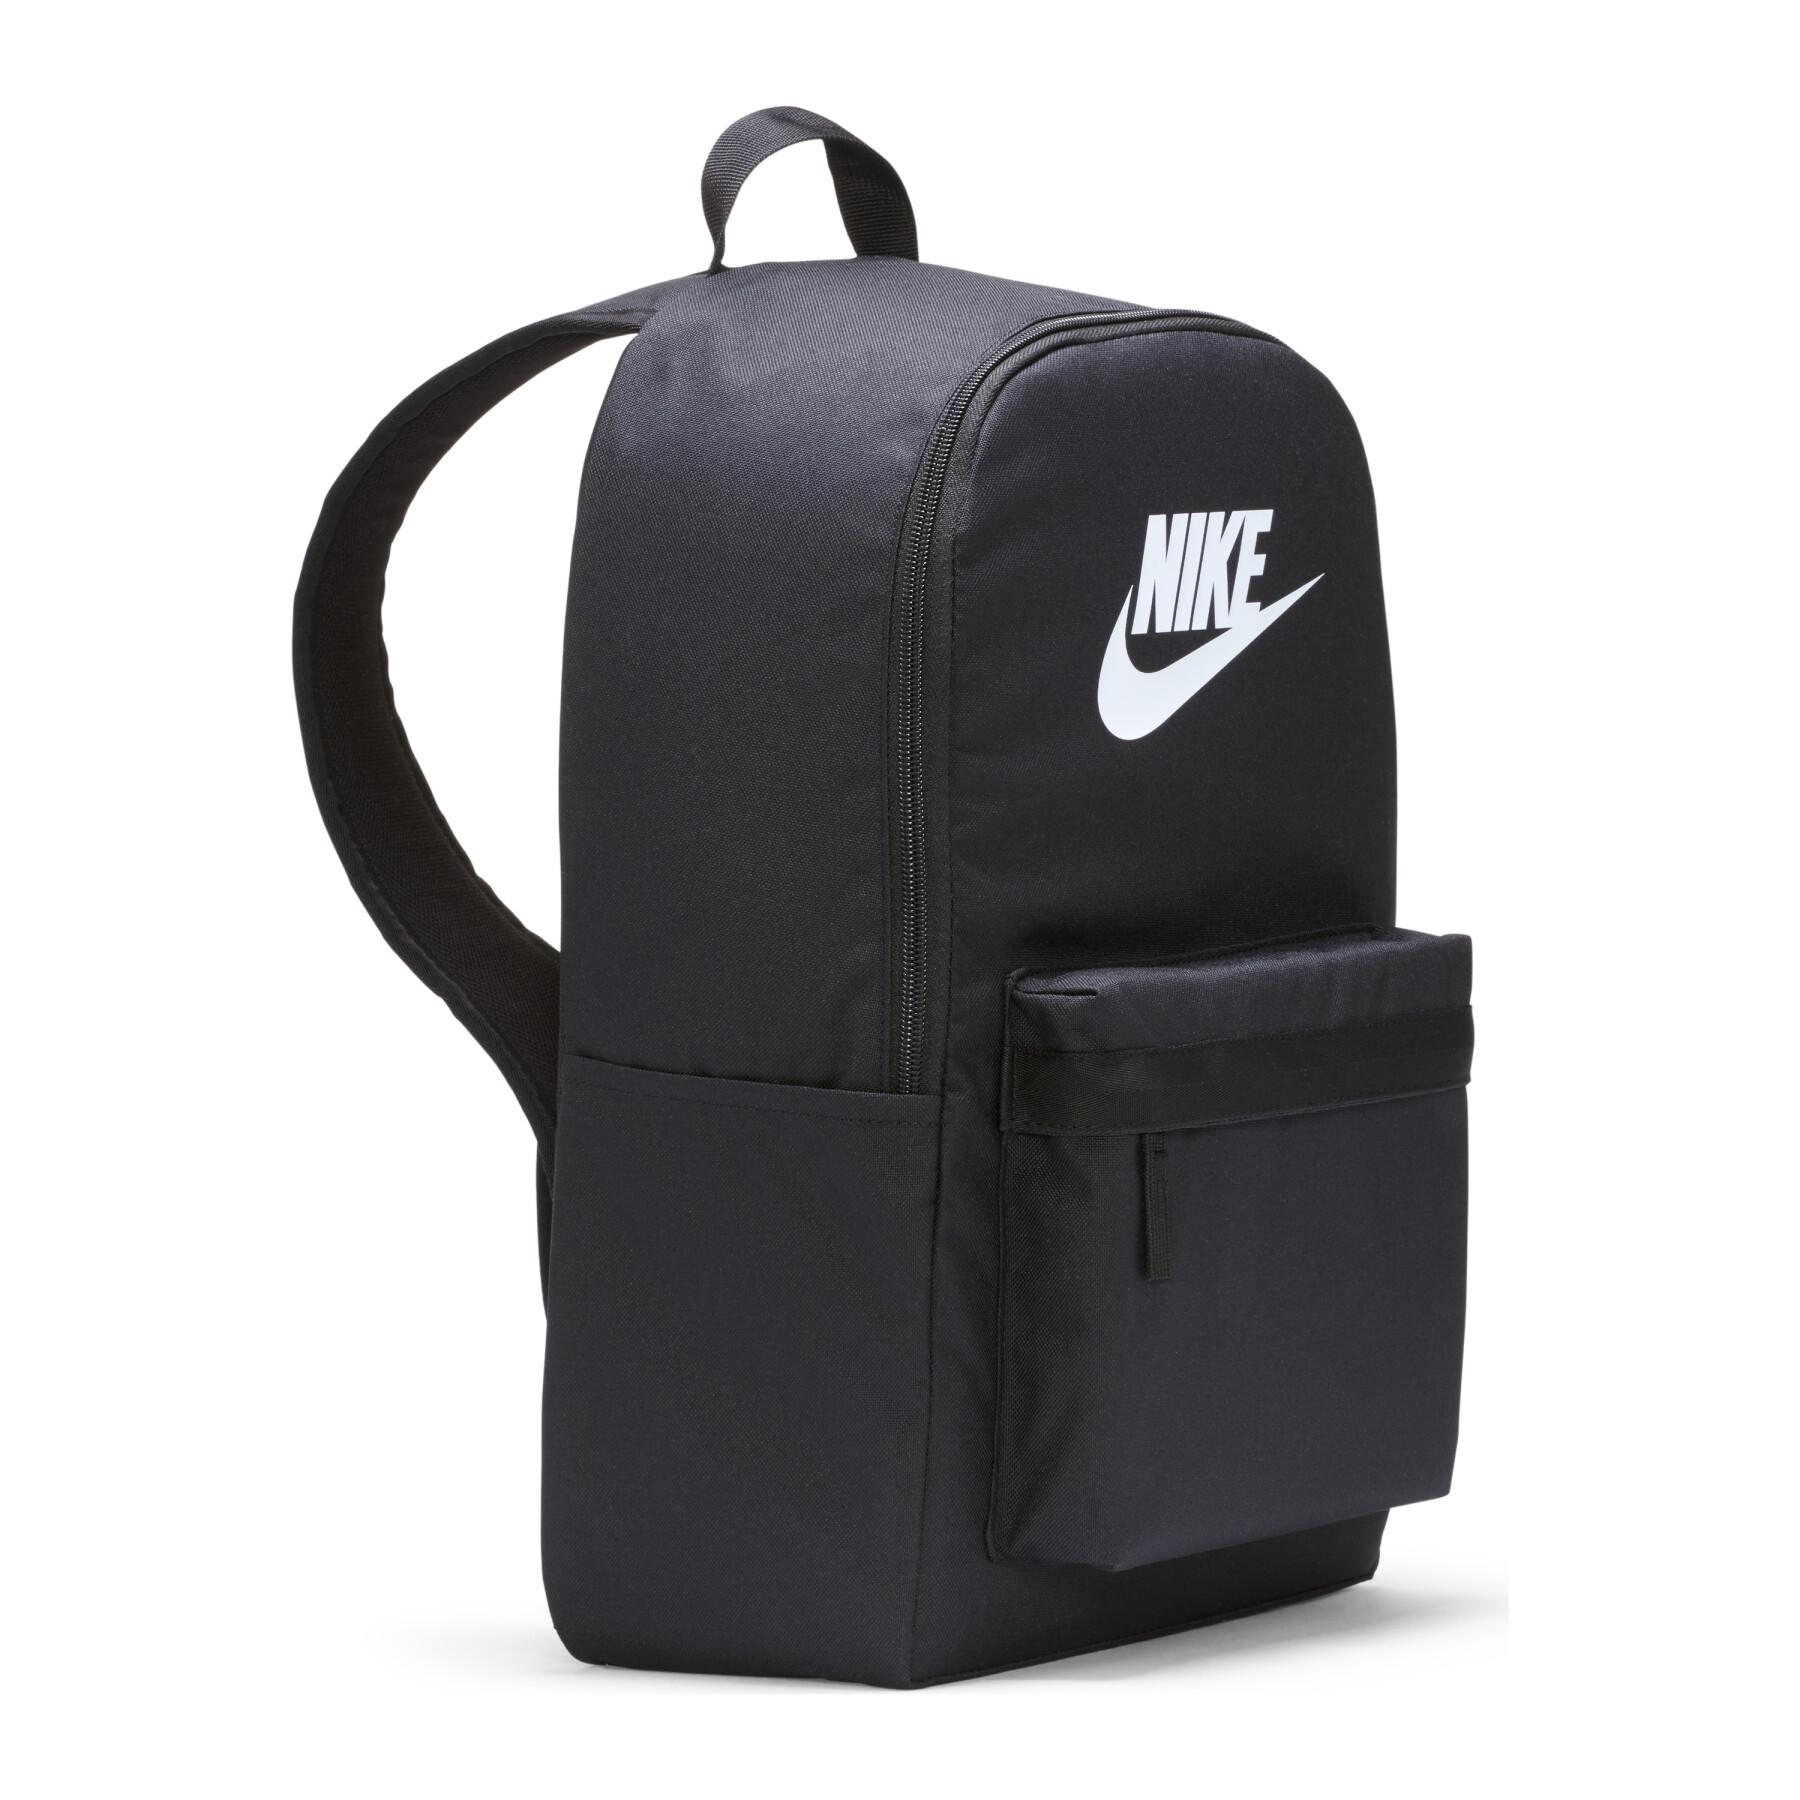 Backpack Nike heritage